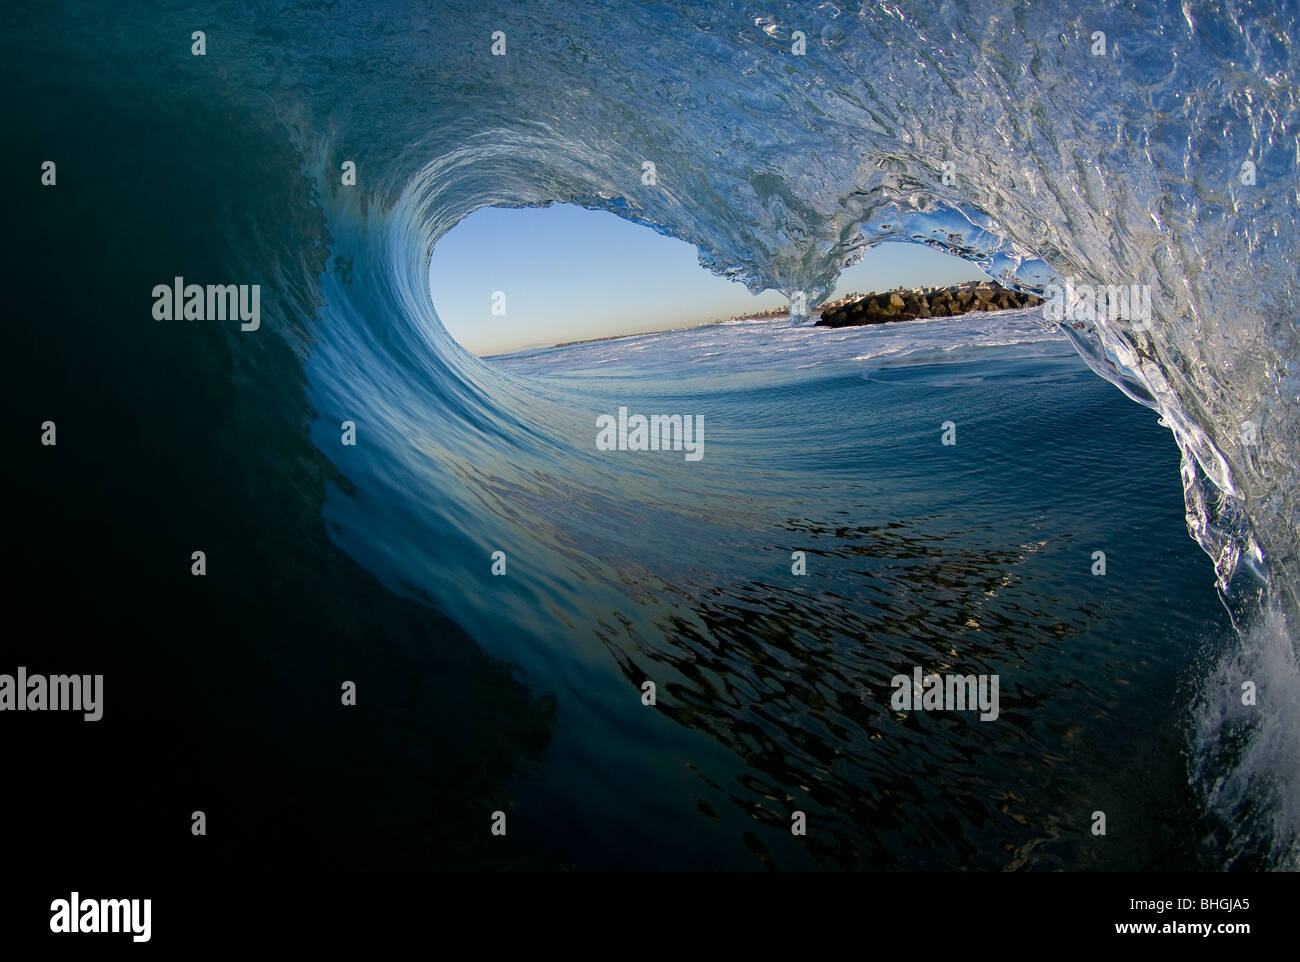 Inside a wave. Stock Photo